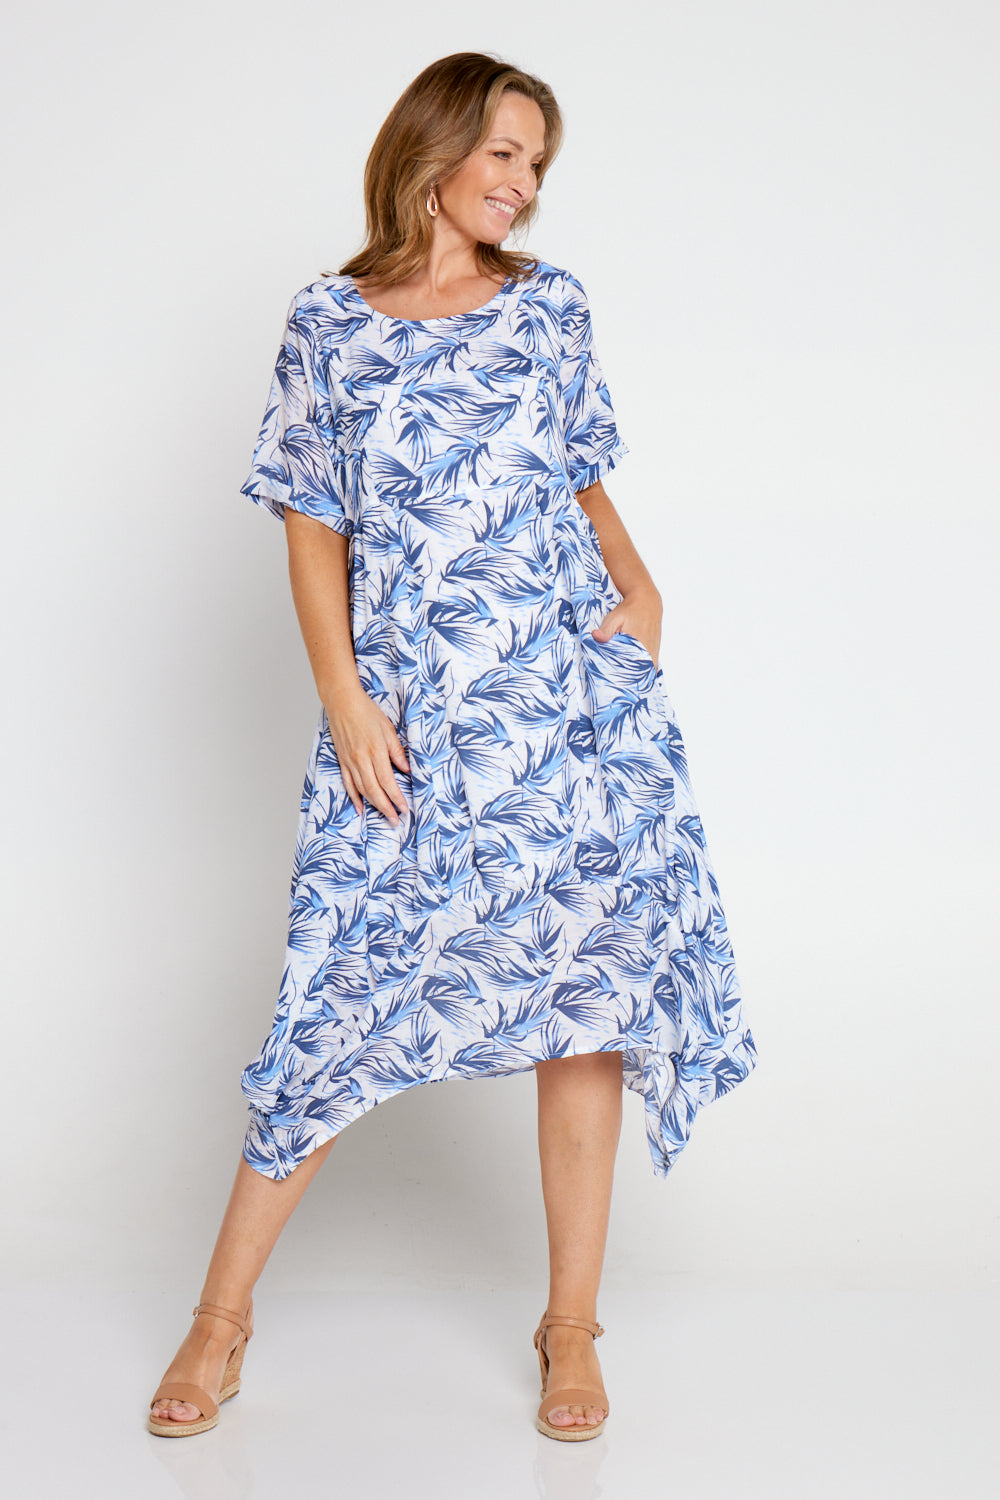 Marisol Dress - Navy Palm Print